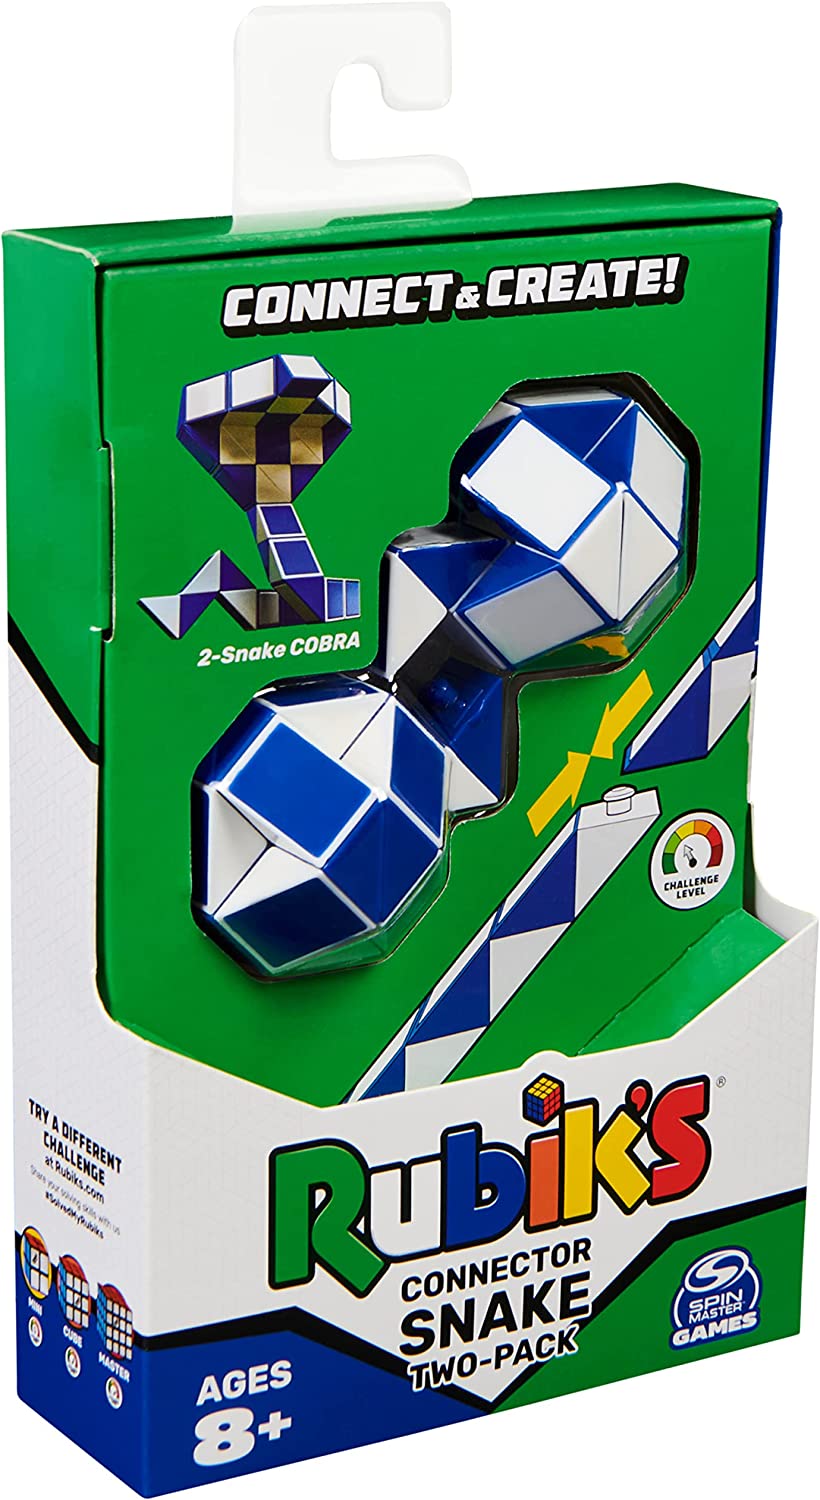 Rubik's Connector Snake 2-Pack